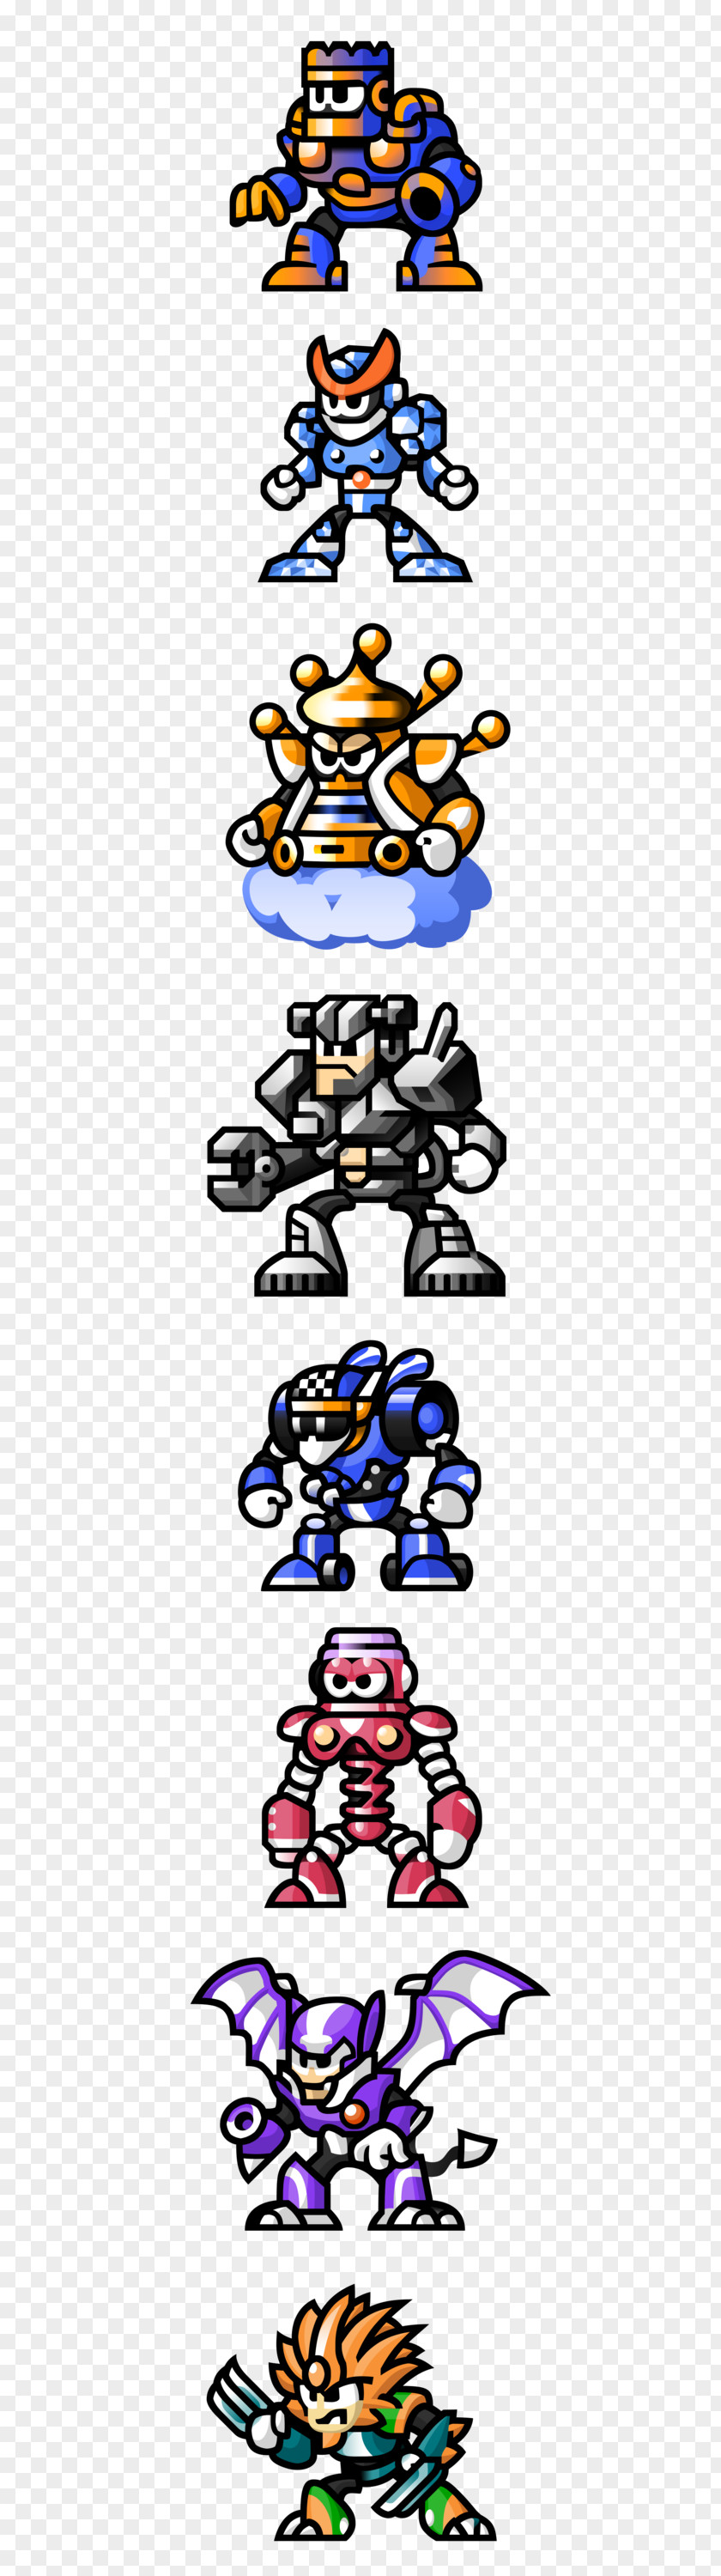 Megaman Mega Man Xtreme 2 7 PNG